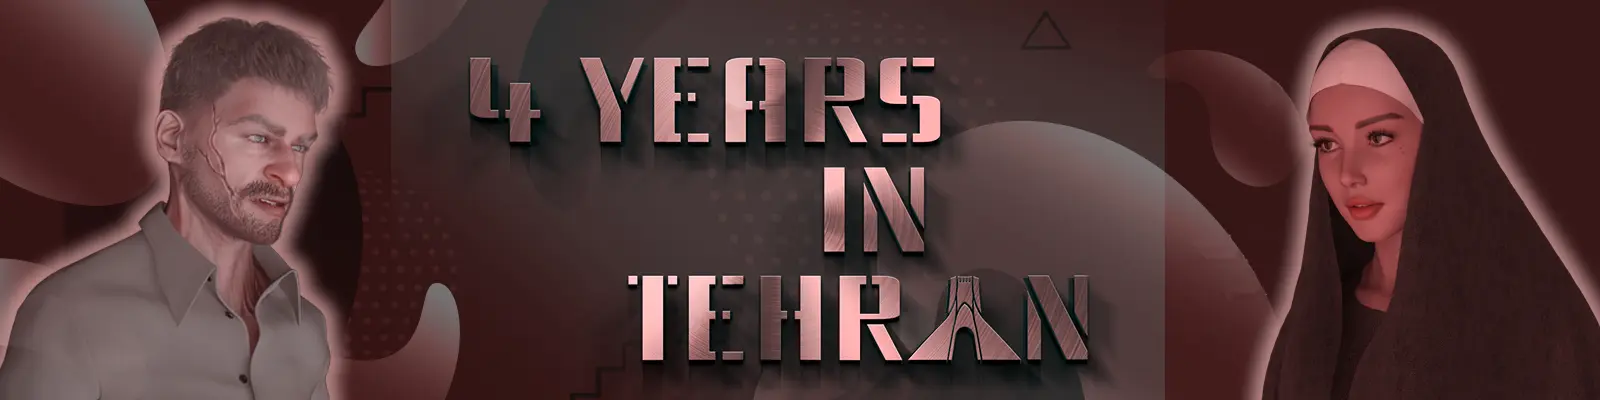 4 Years In Tehran [v0.2] header image